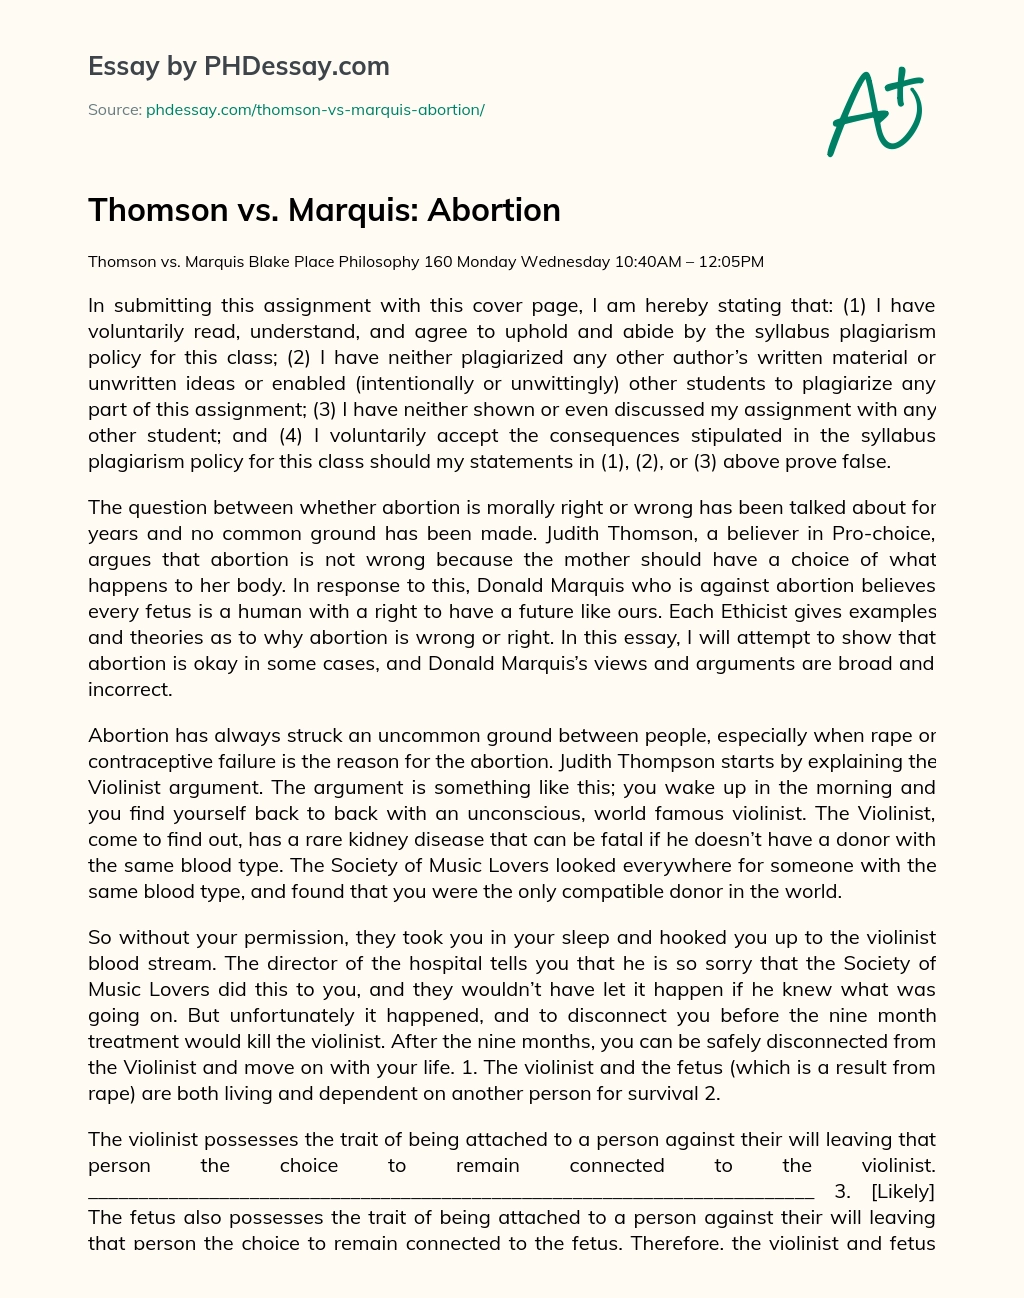 Thomson vs. Marquis: Abortion essay